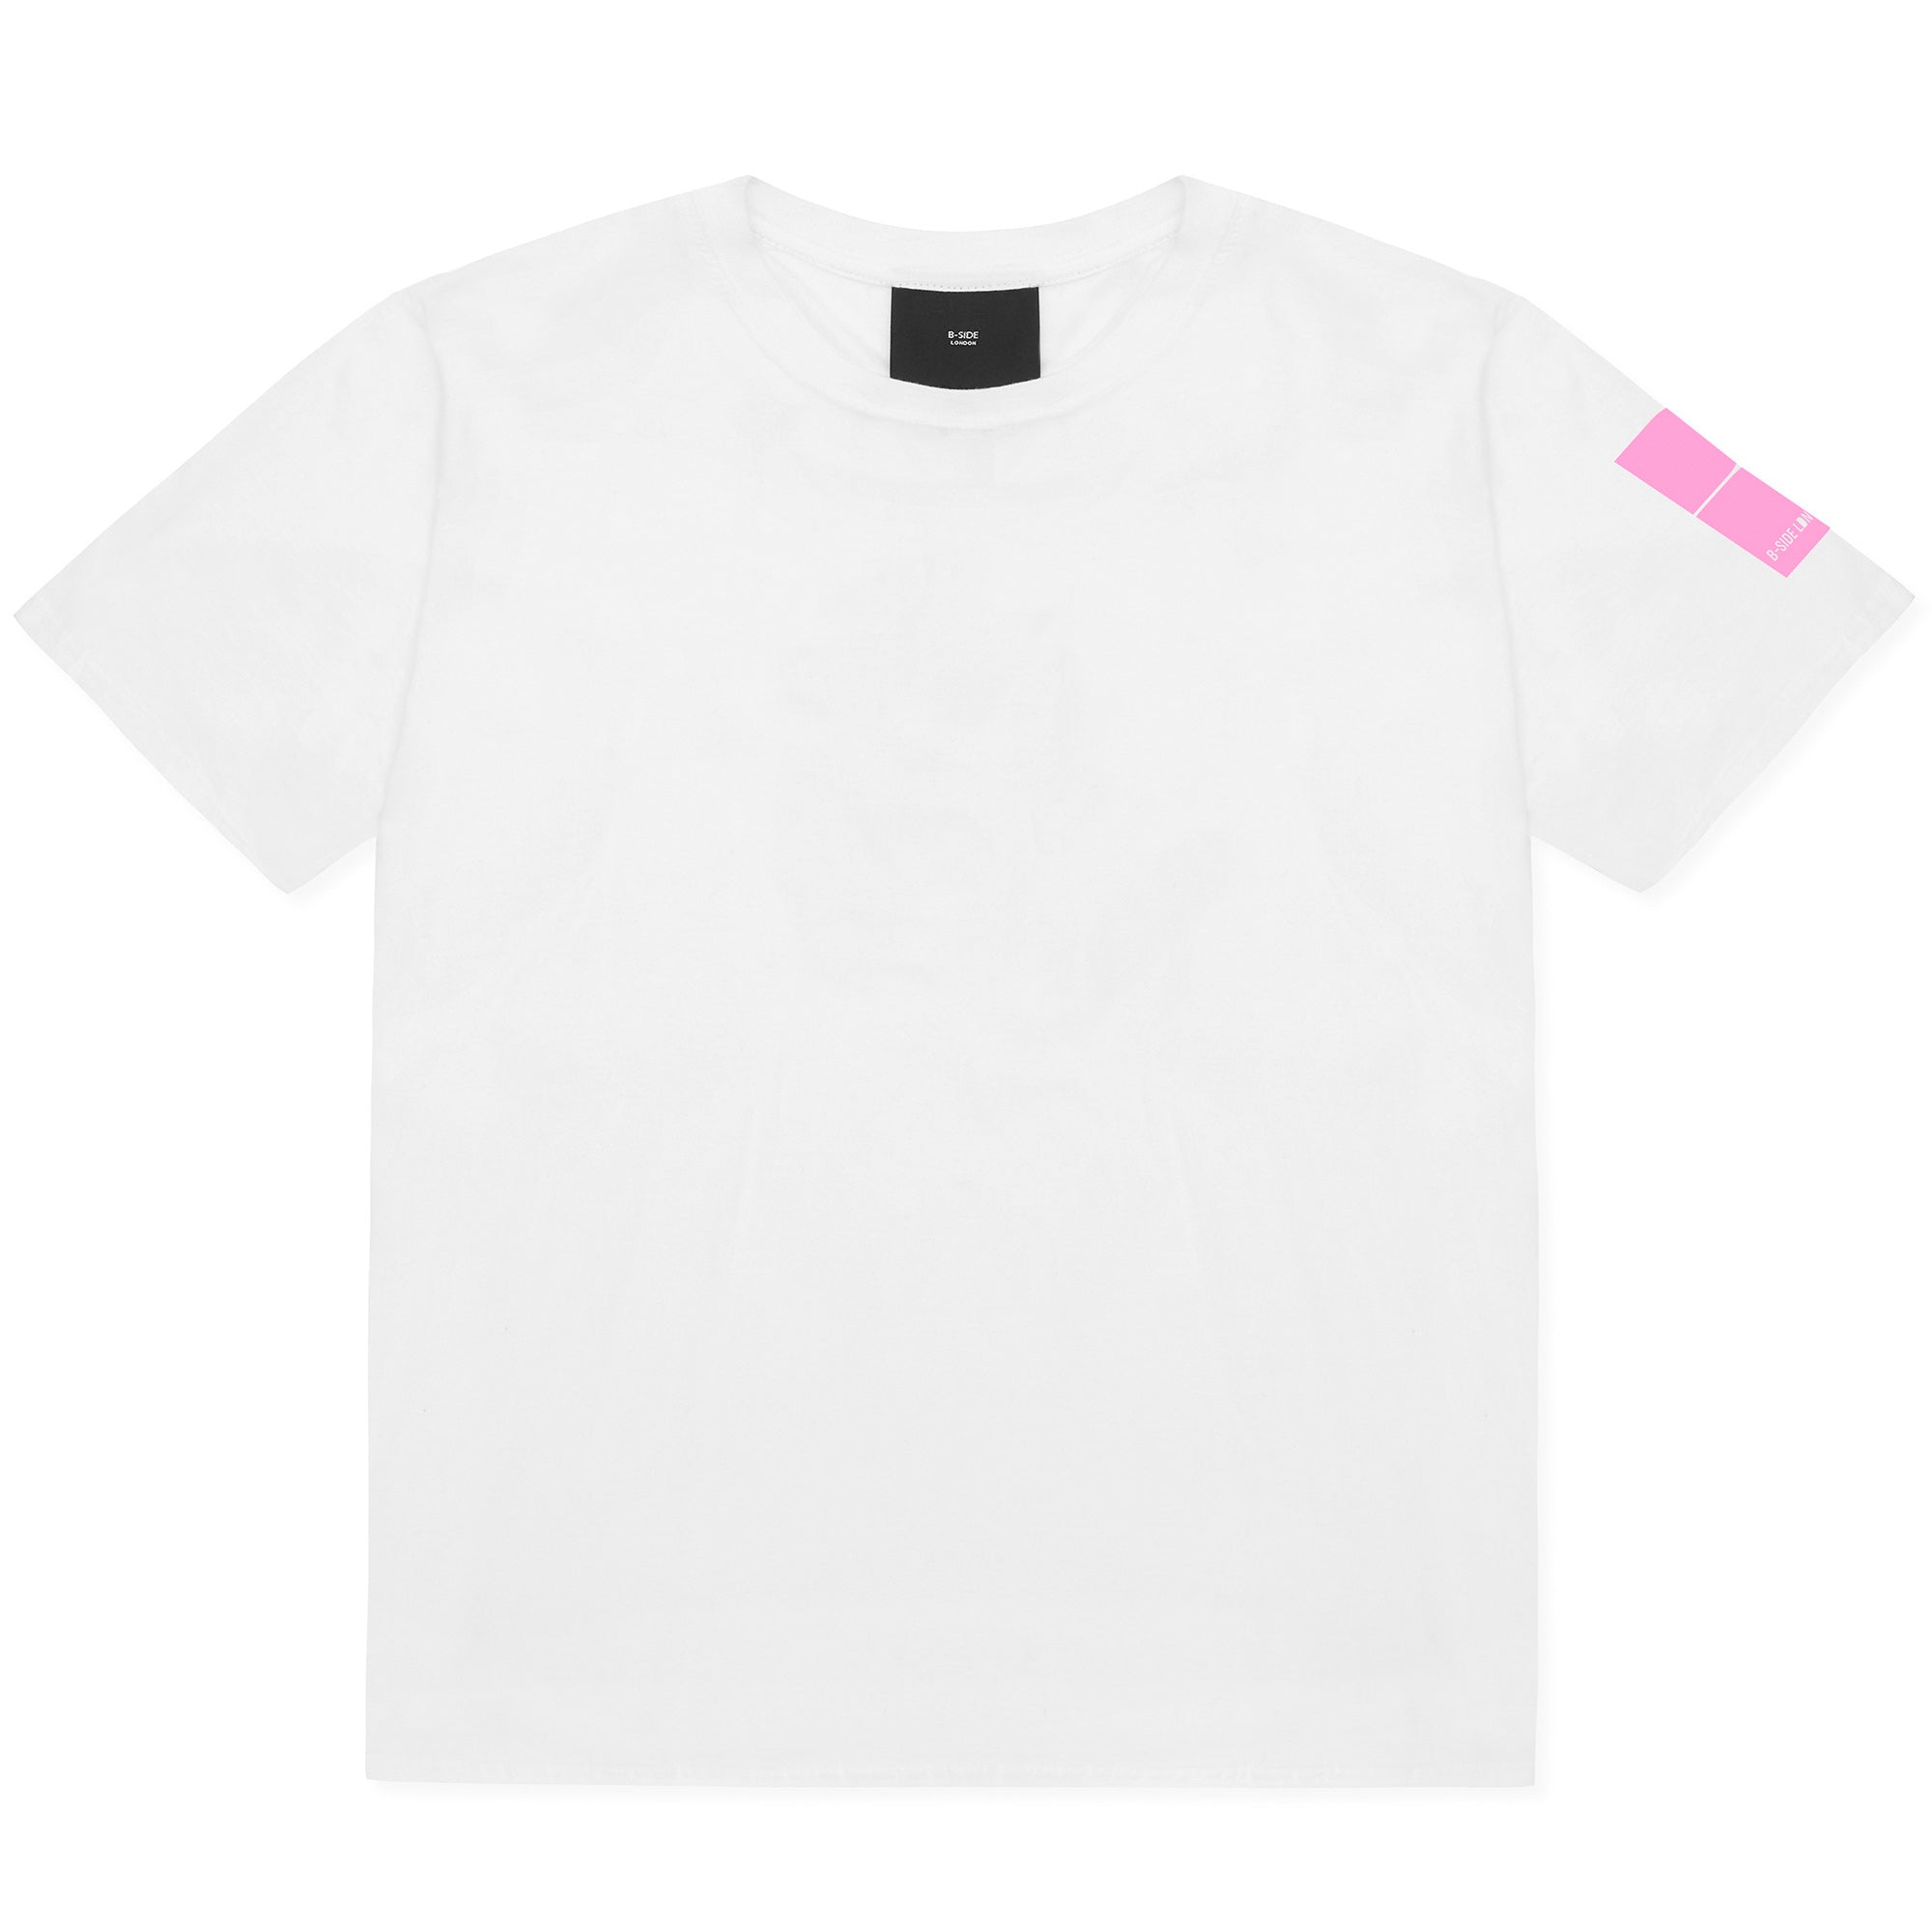 White Throwback Graff T-Shirt - Pink Print